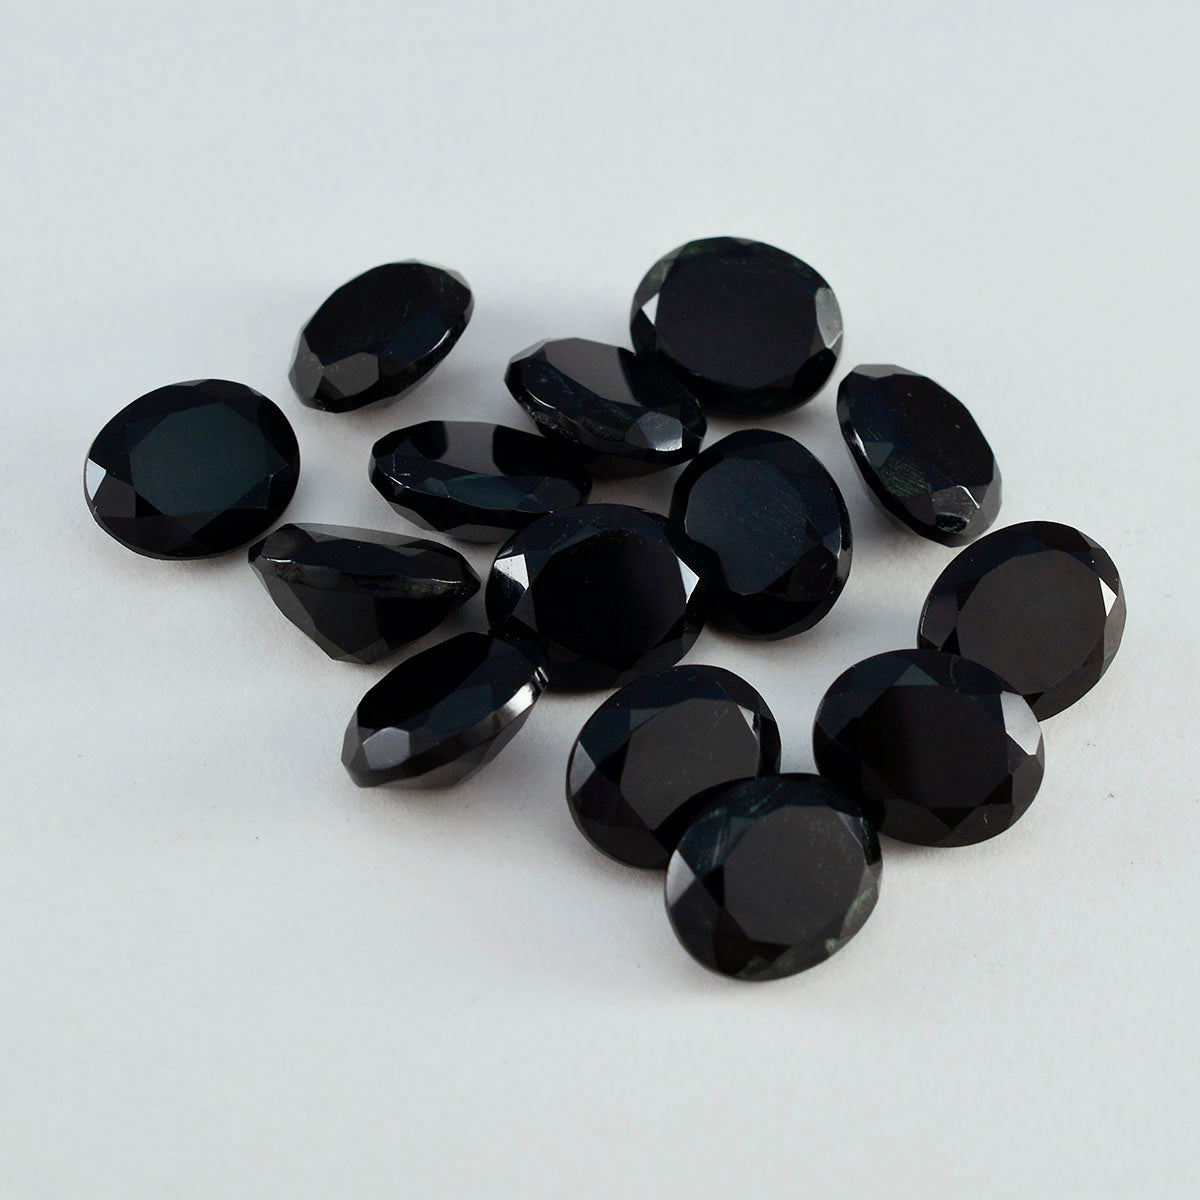 Riyogems 1PC Natural Black Onyx Faceted 8x10 mm Oval Shape wonderful Quality Gem